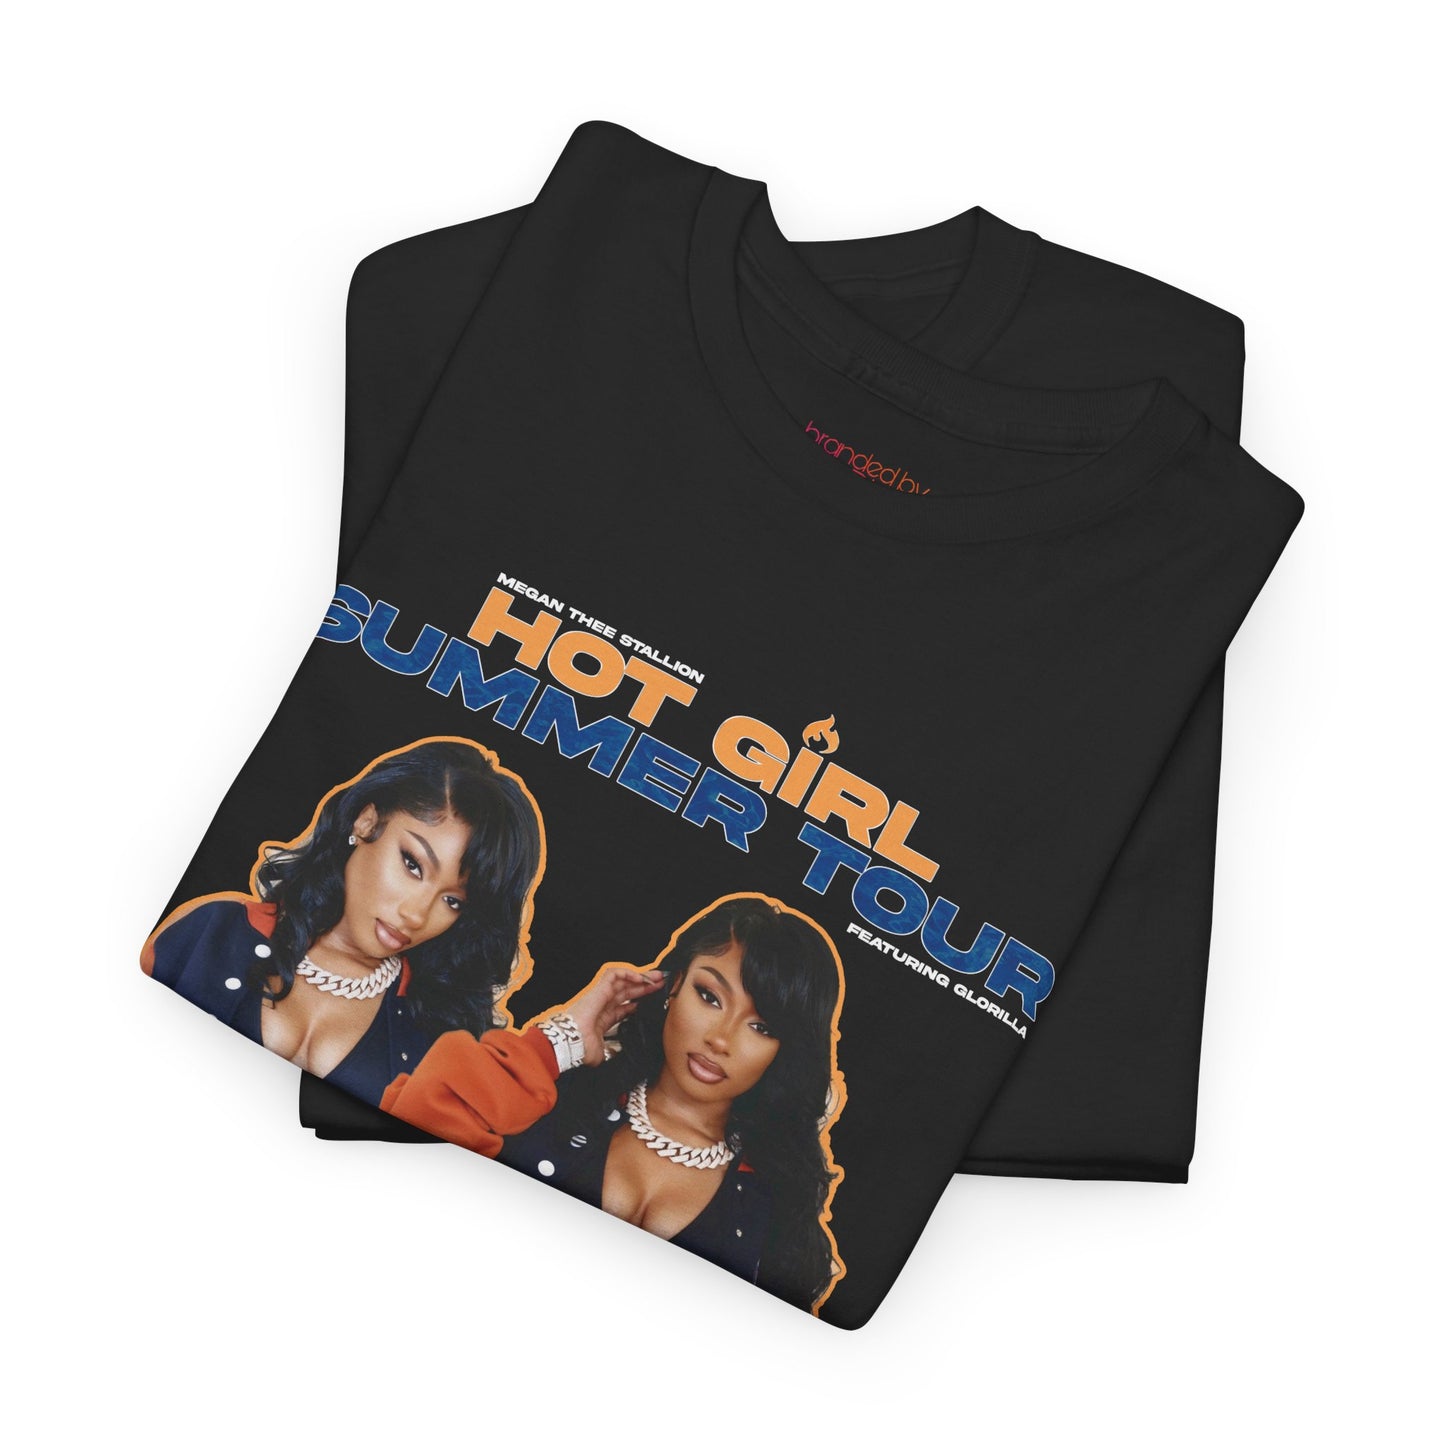 Hot Girl Summer Tour Graphic Tee - Original